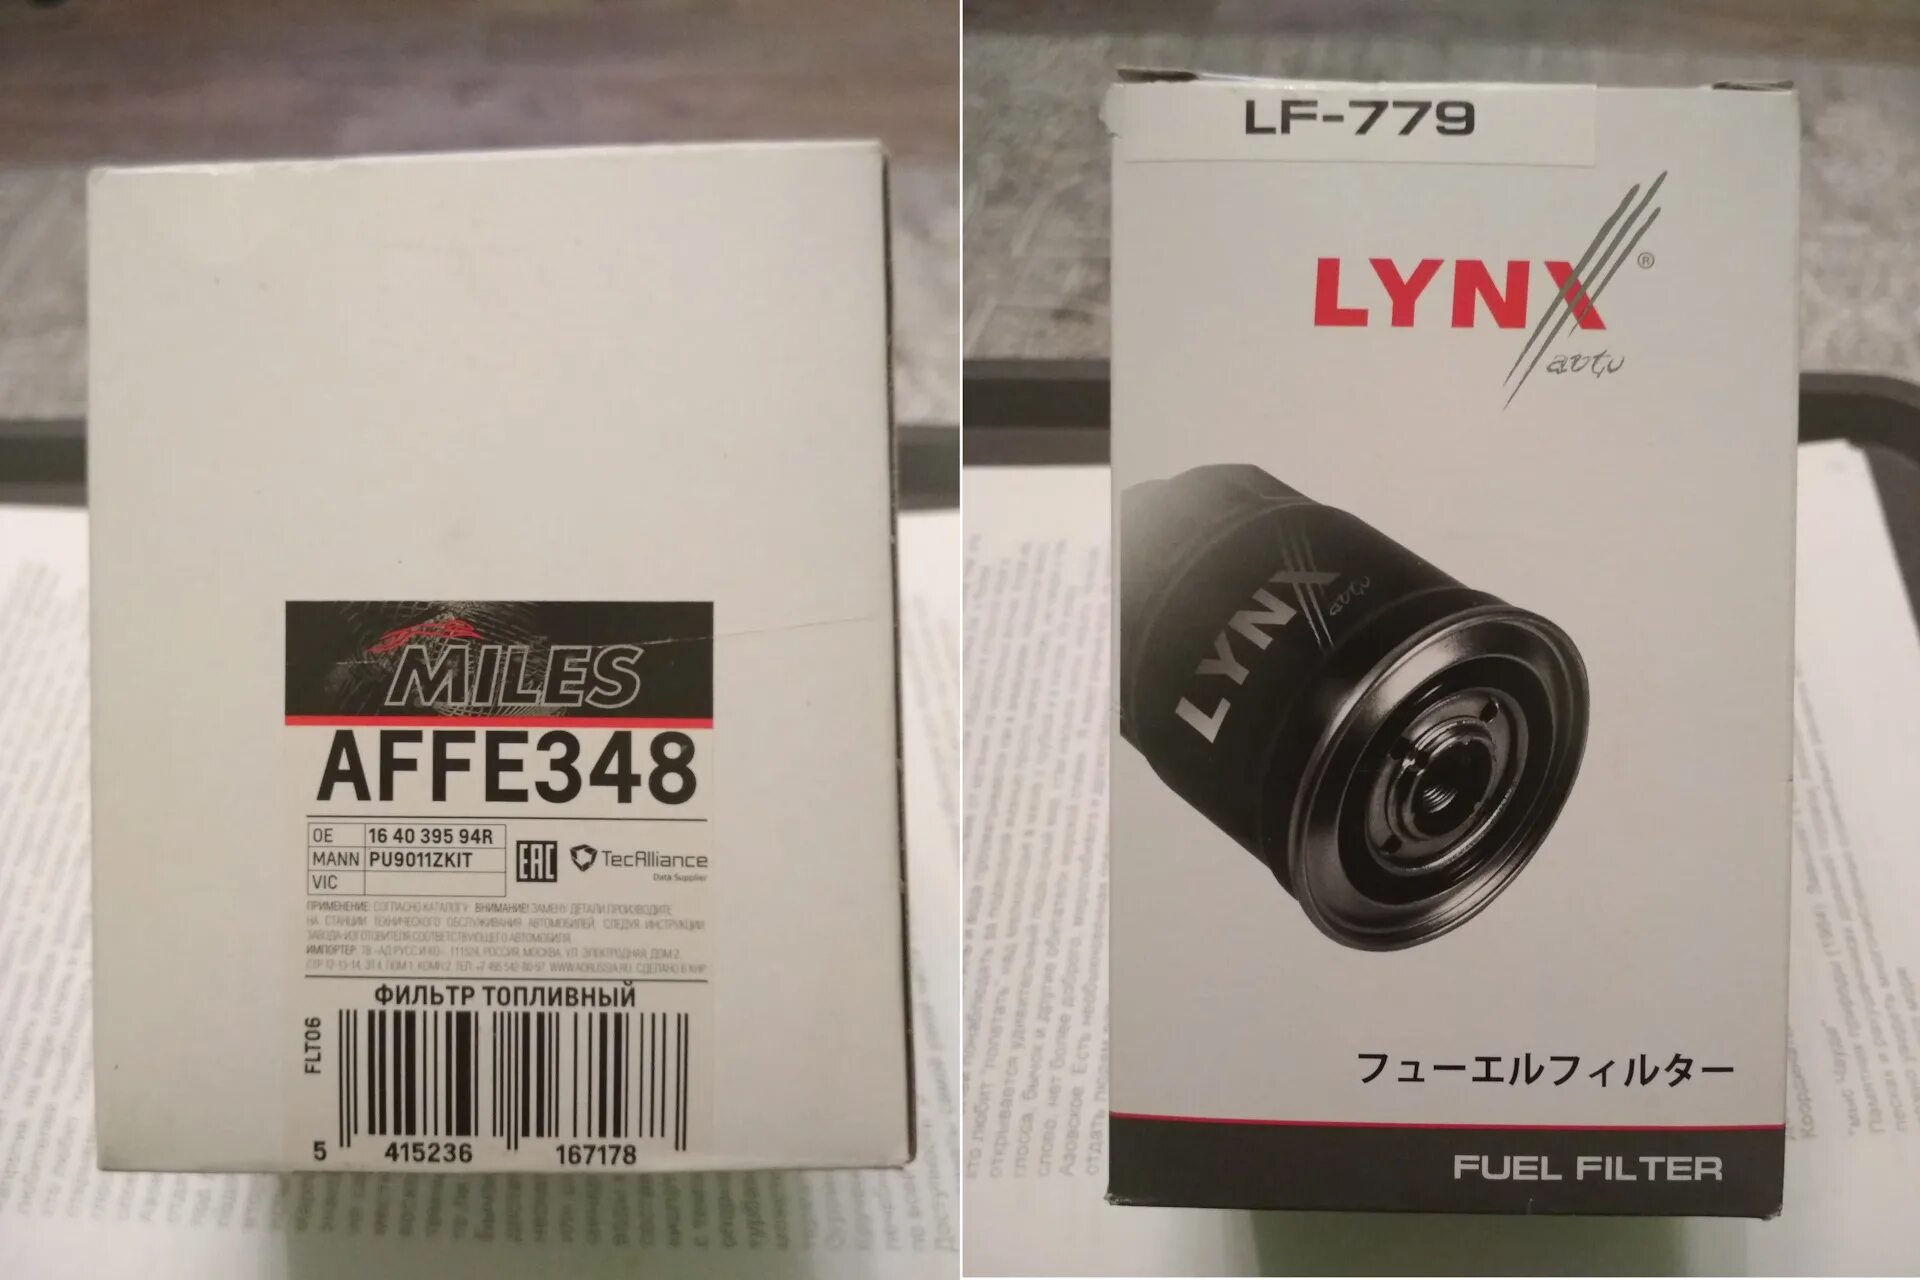 Фильтр топливный Lynx lf779. LYNXAUTO LF-779 фильтр топливный. LYNXAUTO LF-779. Фильтр топливный LYNXAUTO LF-779 - LYNXAUTO арт. LF-779.